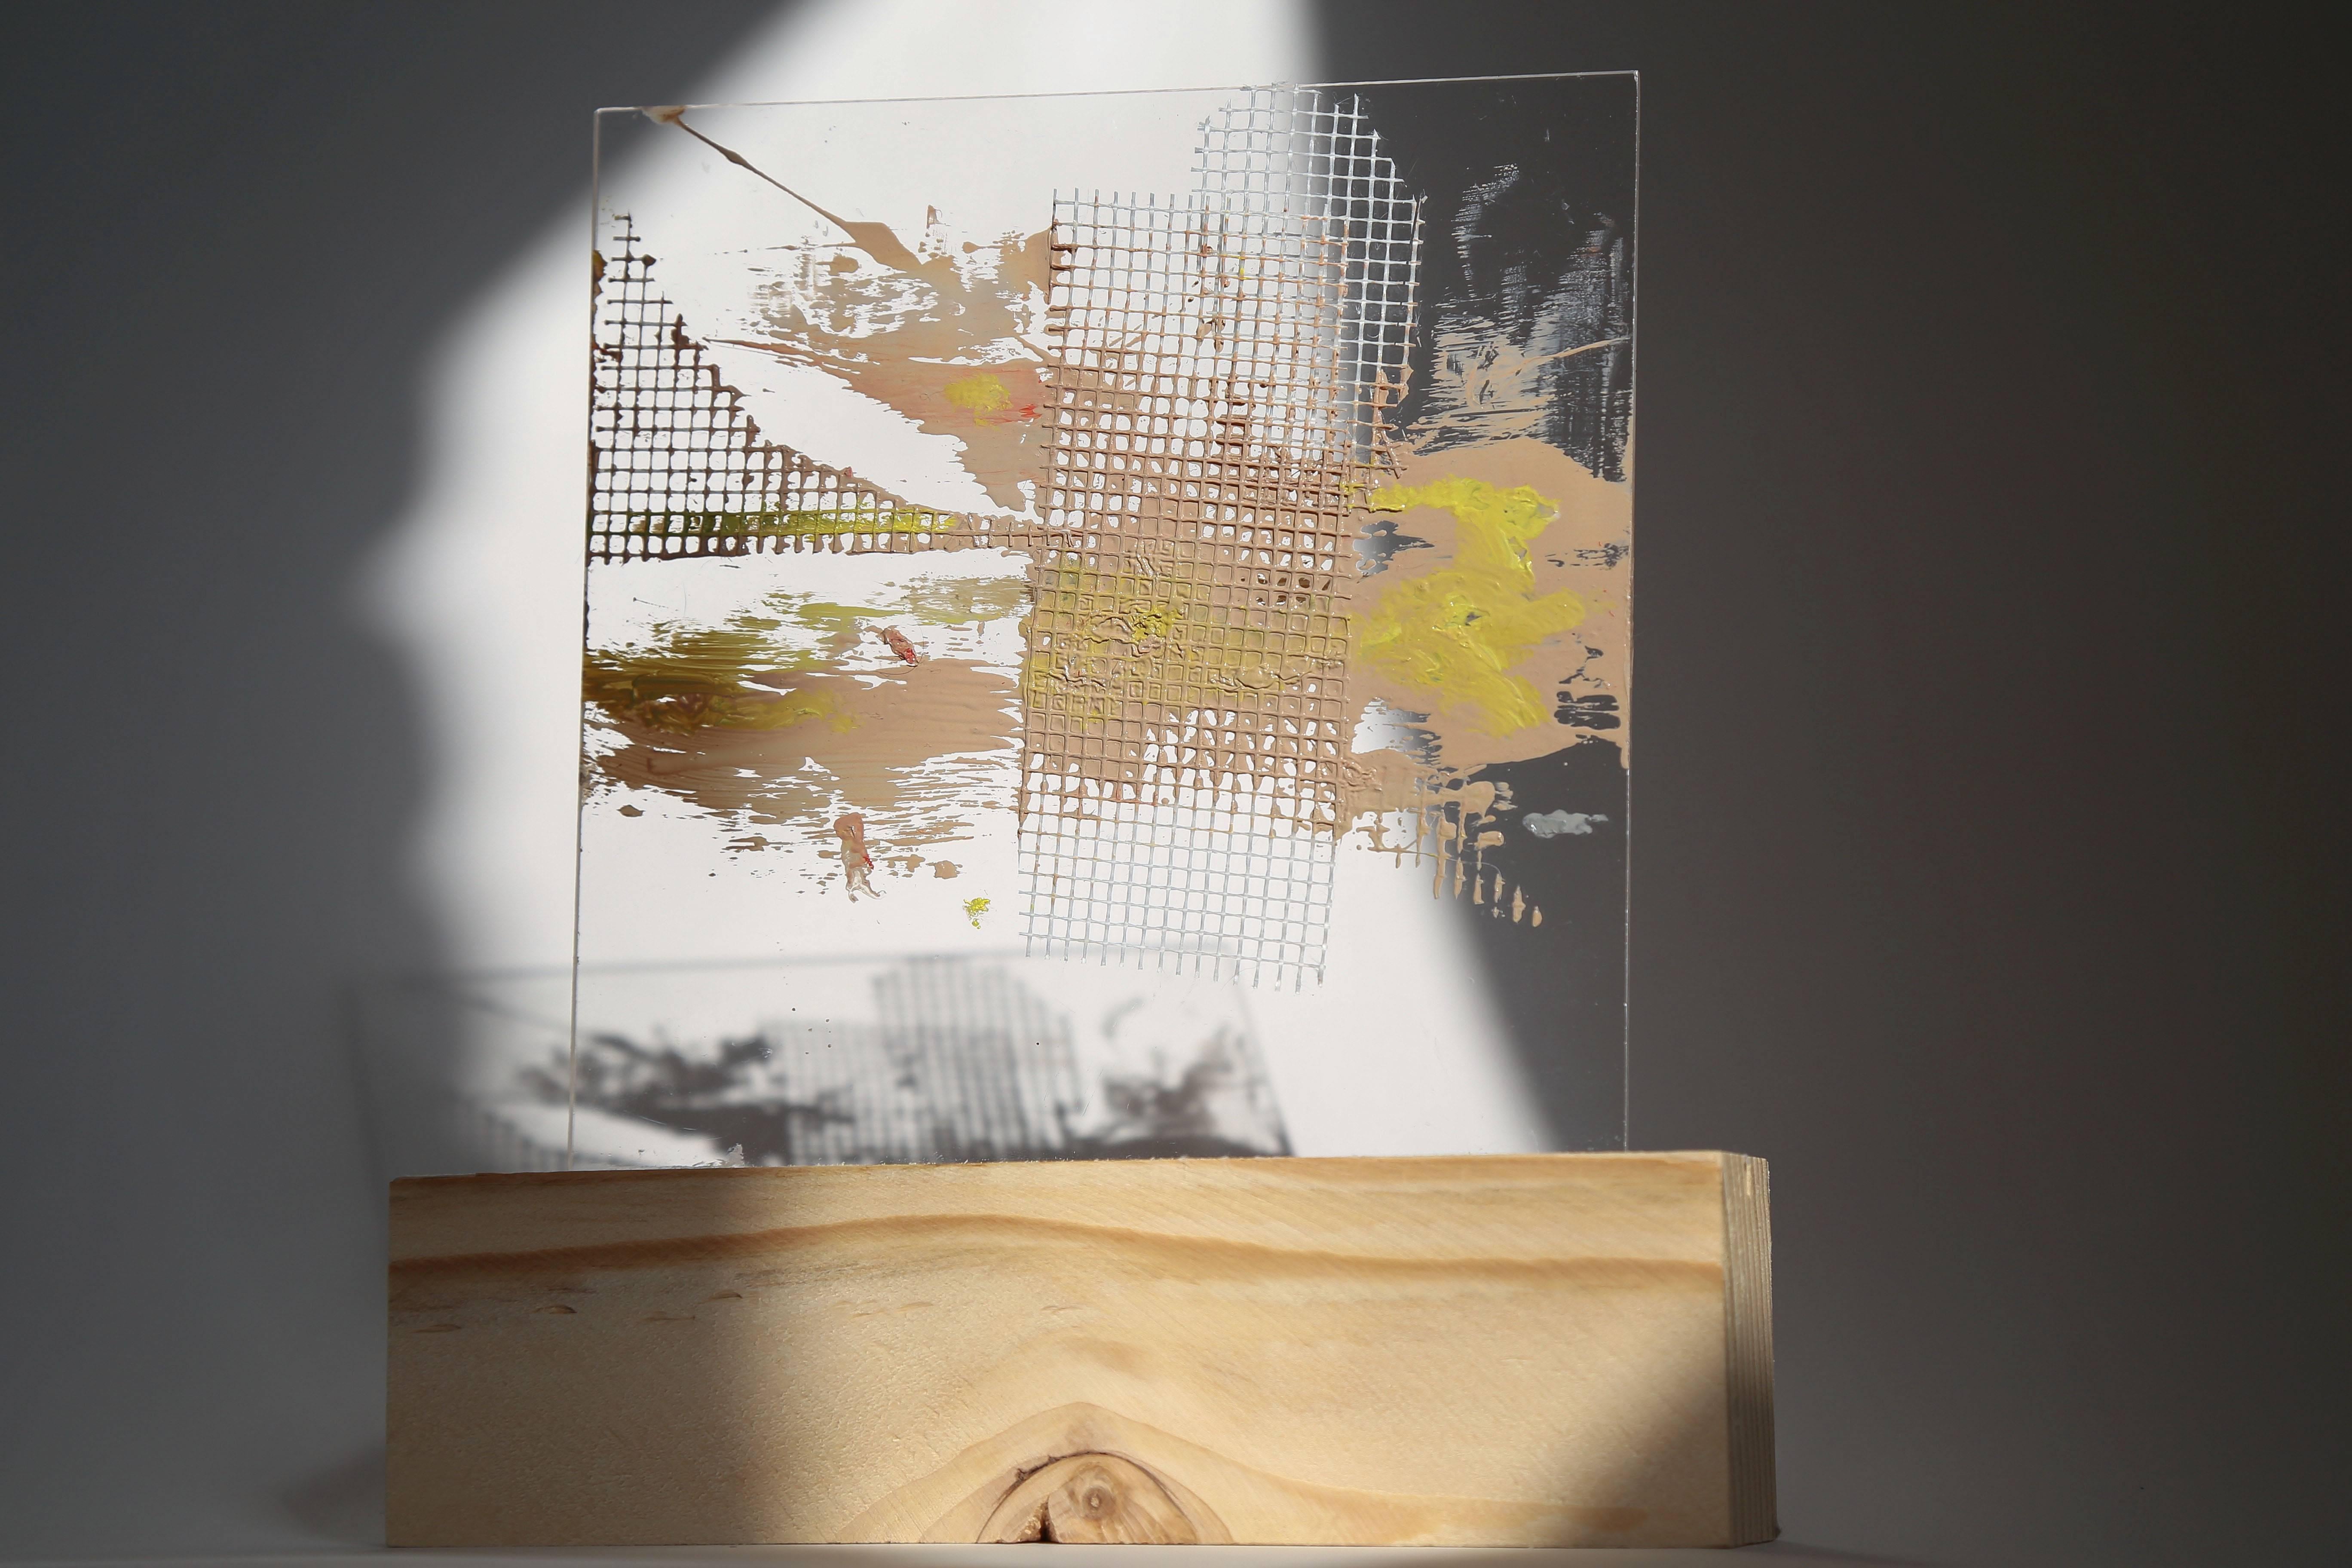 Lourdes Rivera, Retrospektive 11, 2015, Stoff, Plexiglas, Holz, Ölfarbe